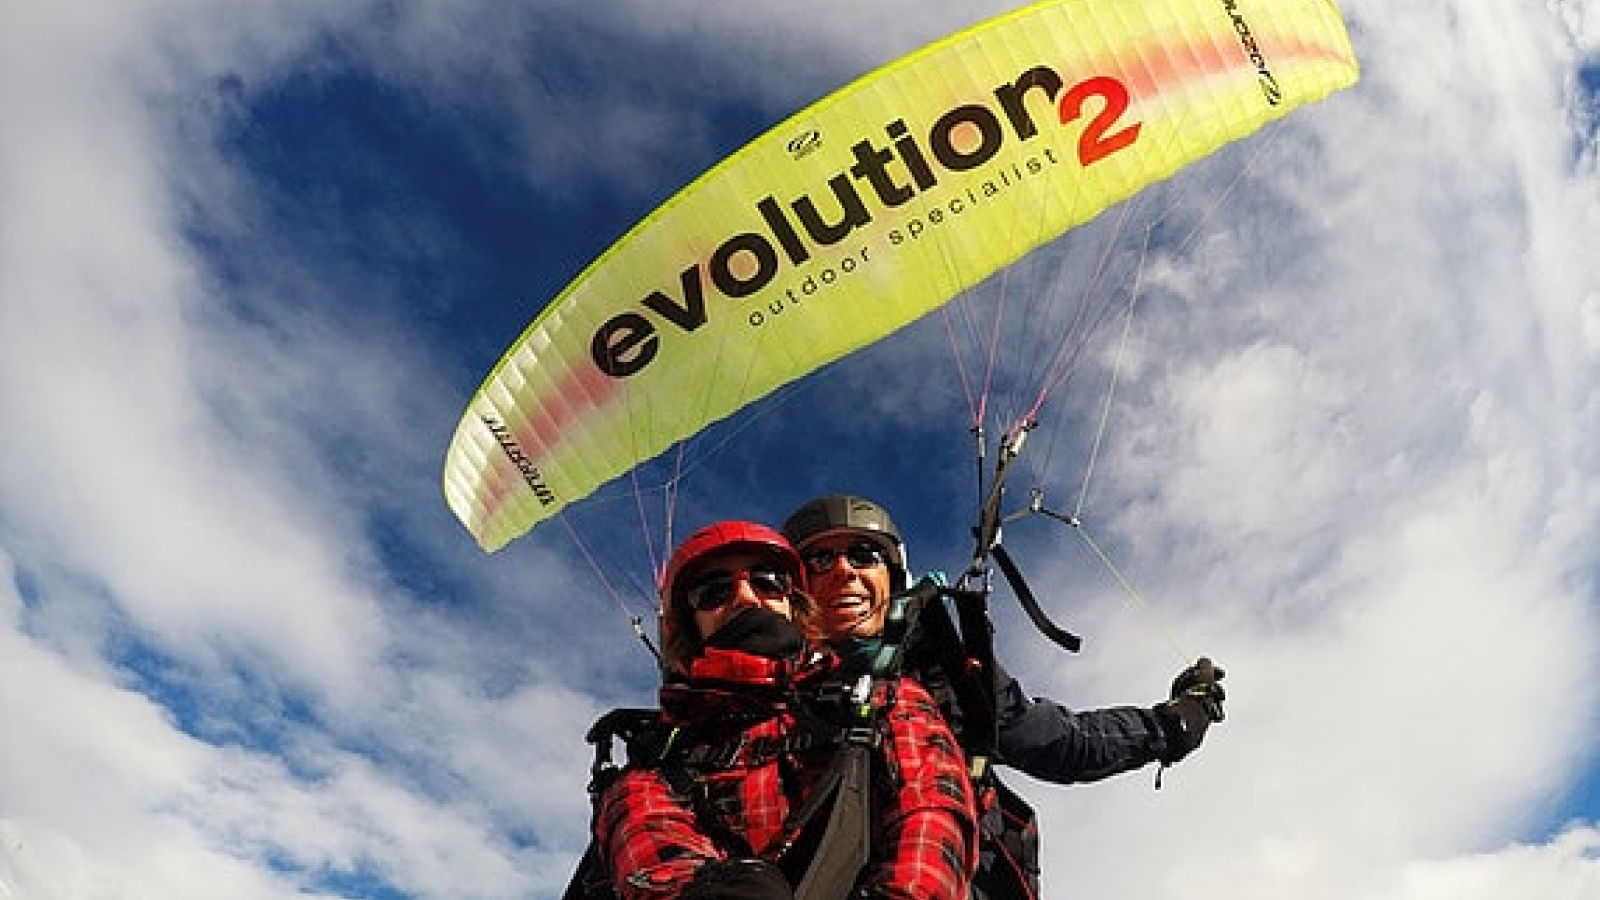 Evolution2-chamonix-paragliding